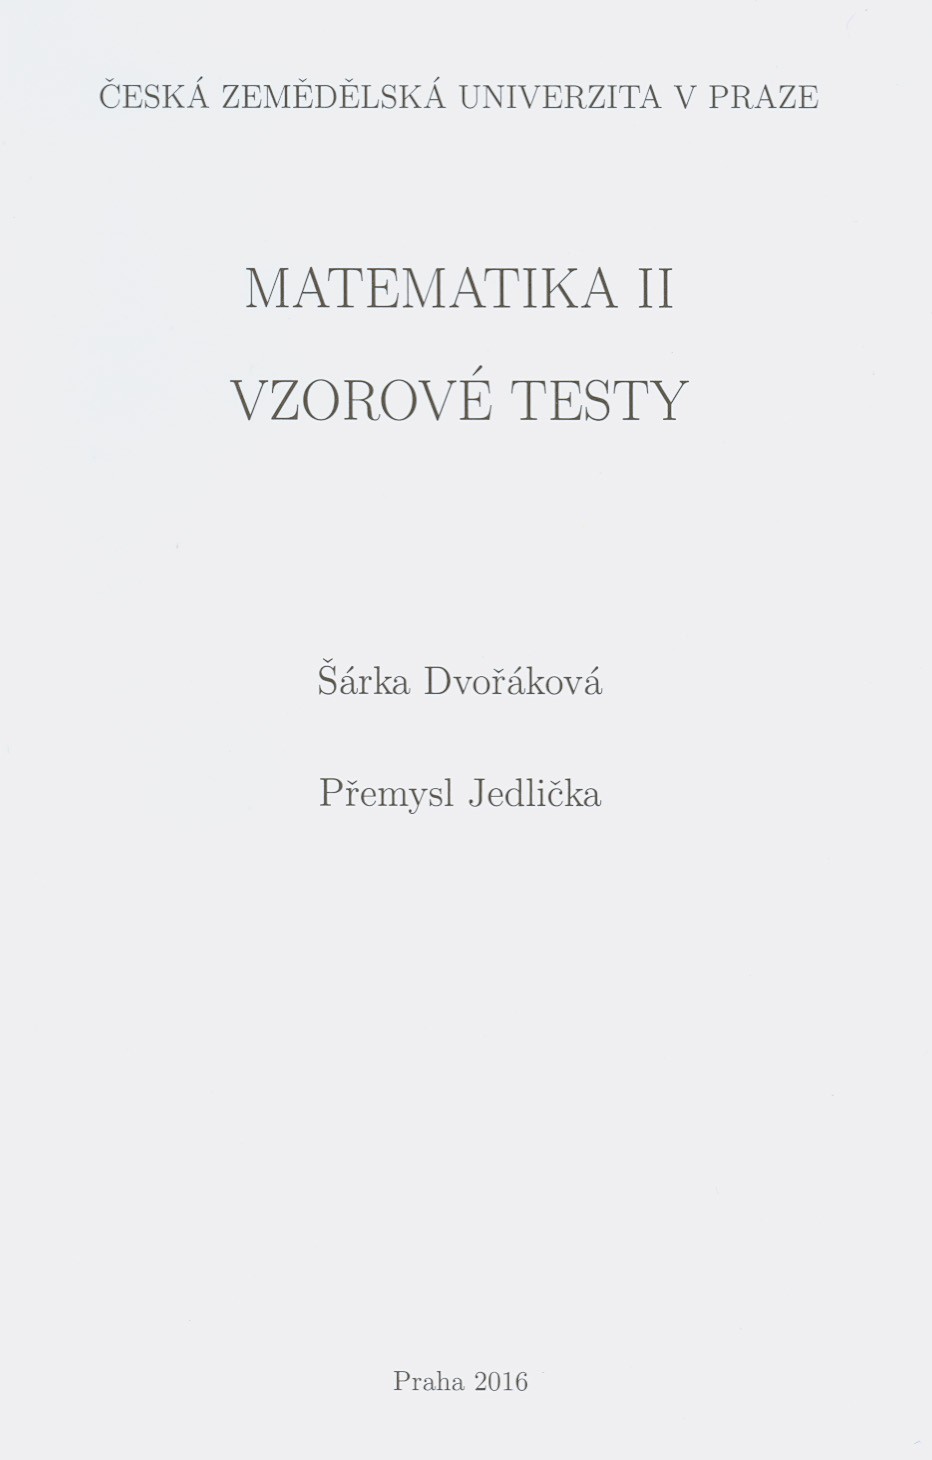 Matematika II - vzorové testy, 267